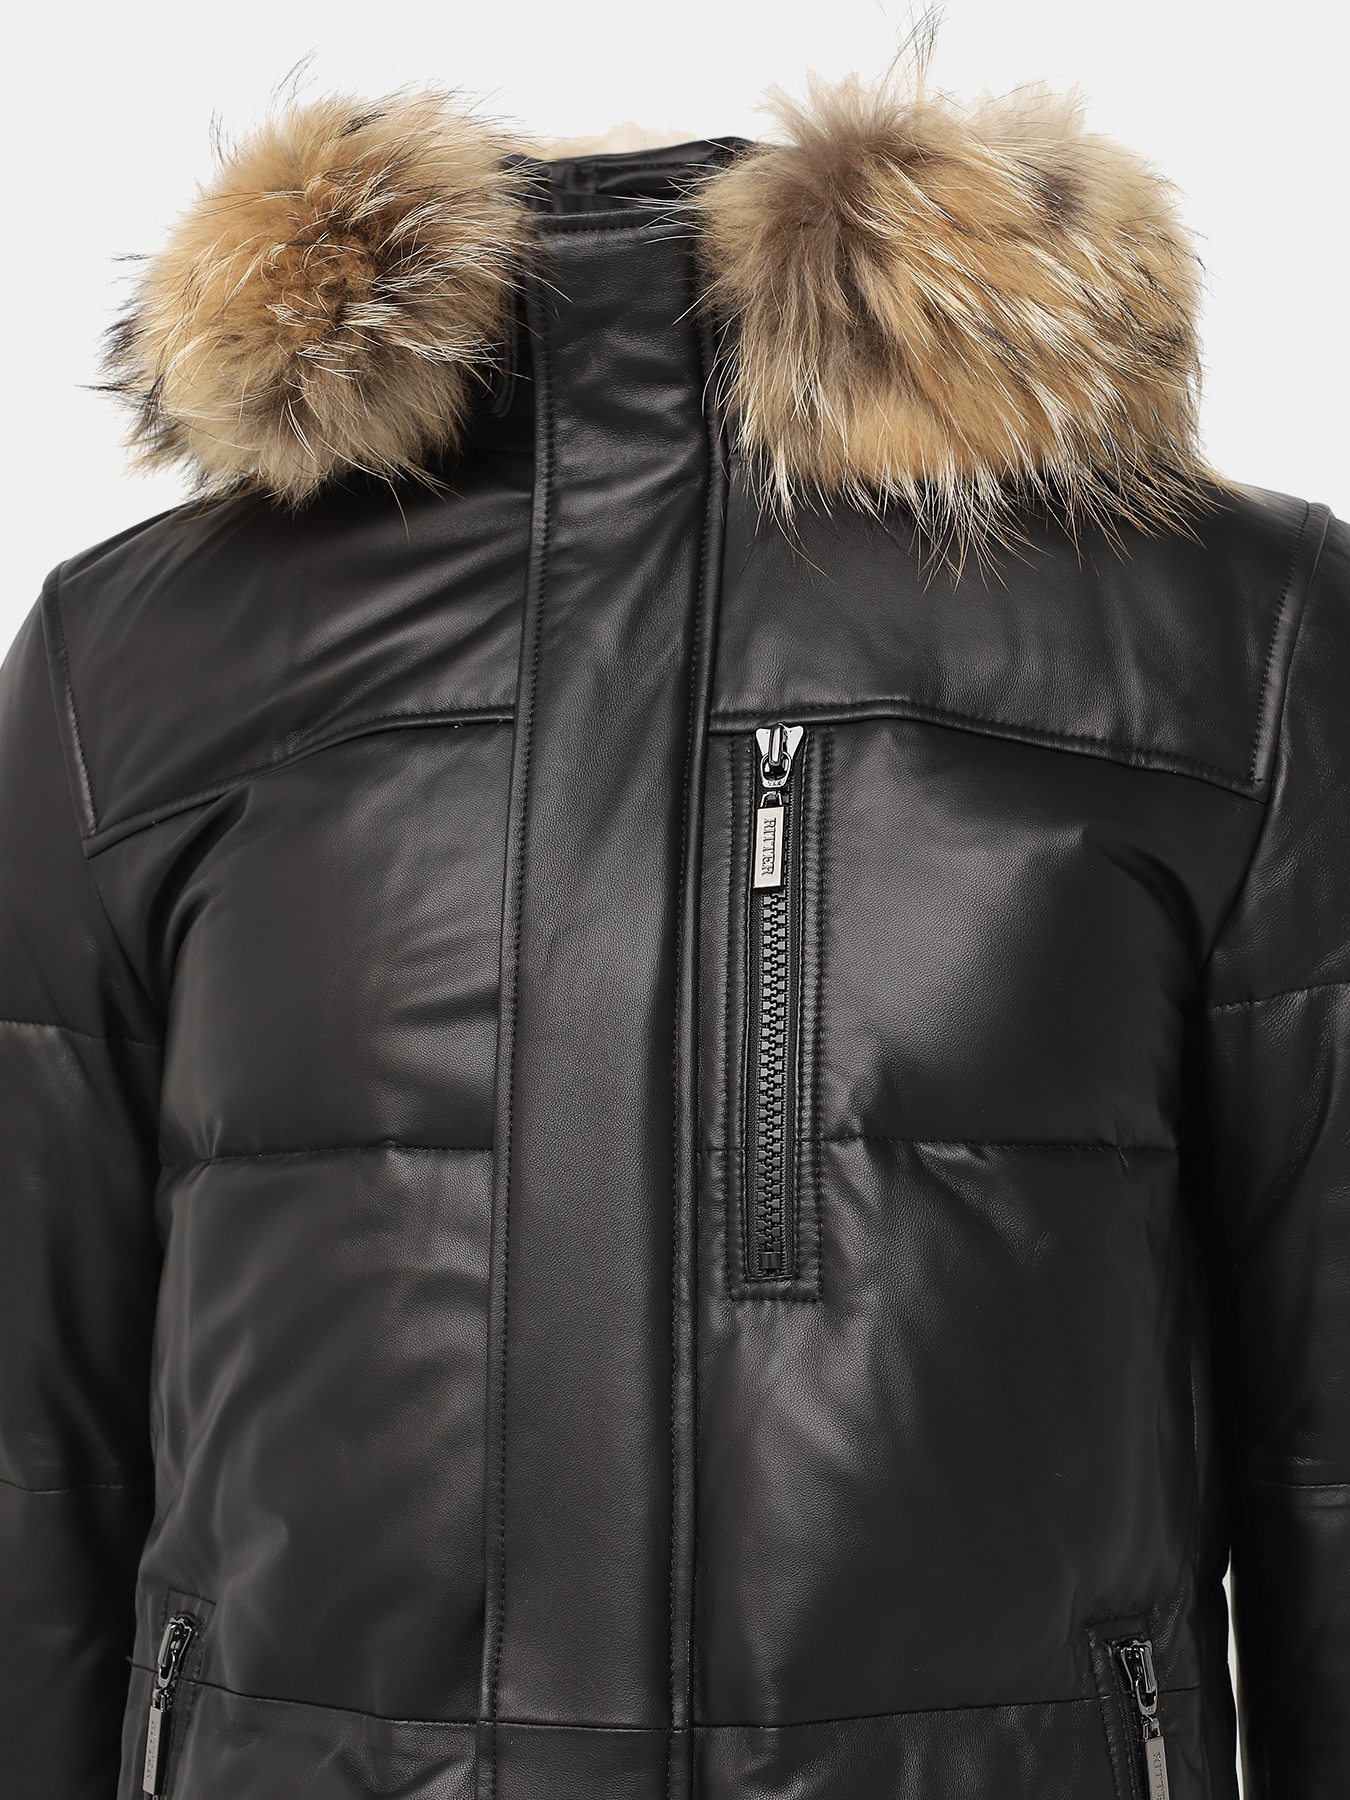 Кожаная куртка Ritter 390990-032, цвет черный, размер 62 - фото 7